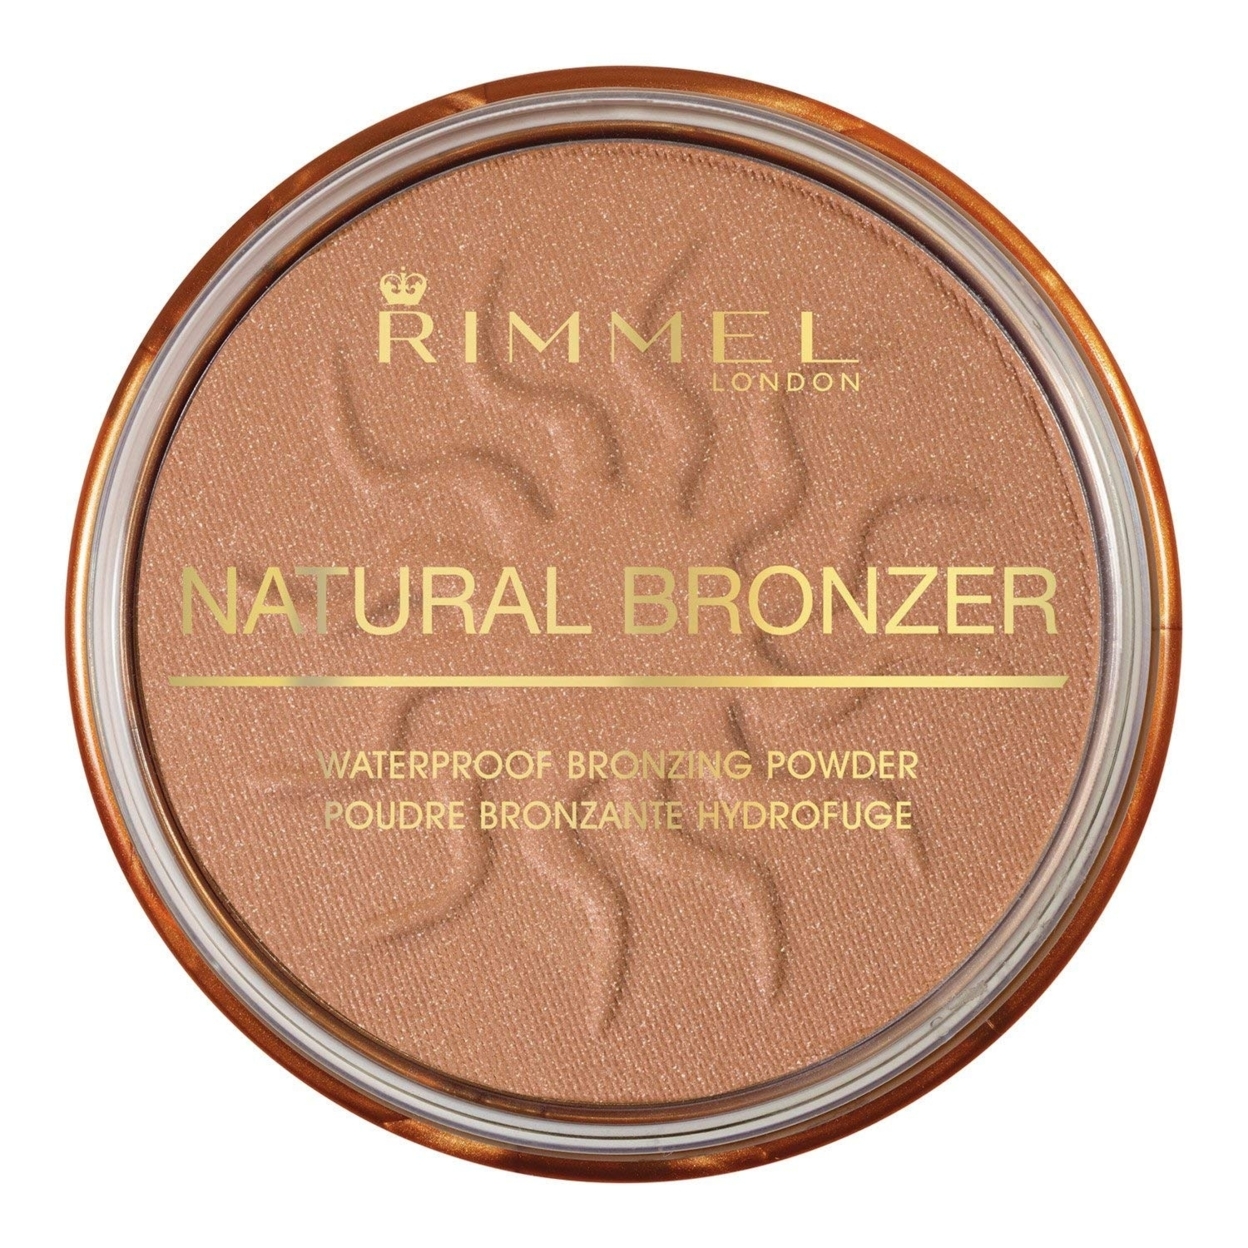 Rimmel London Natural Bronzer, Sun Dance, 0.49 oz - image 1 of 4